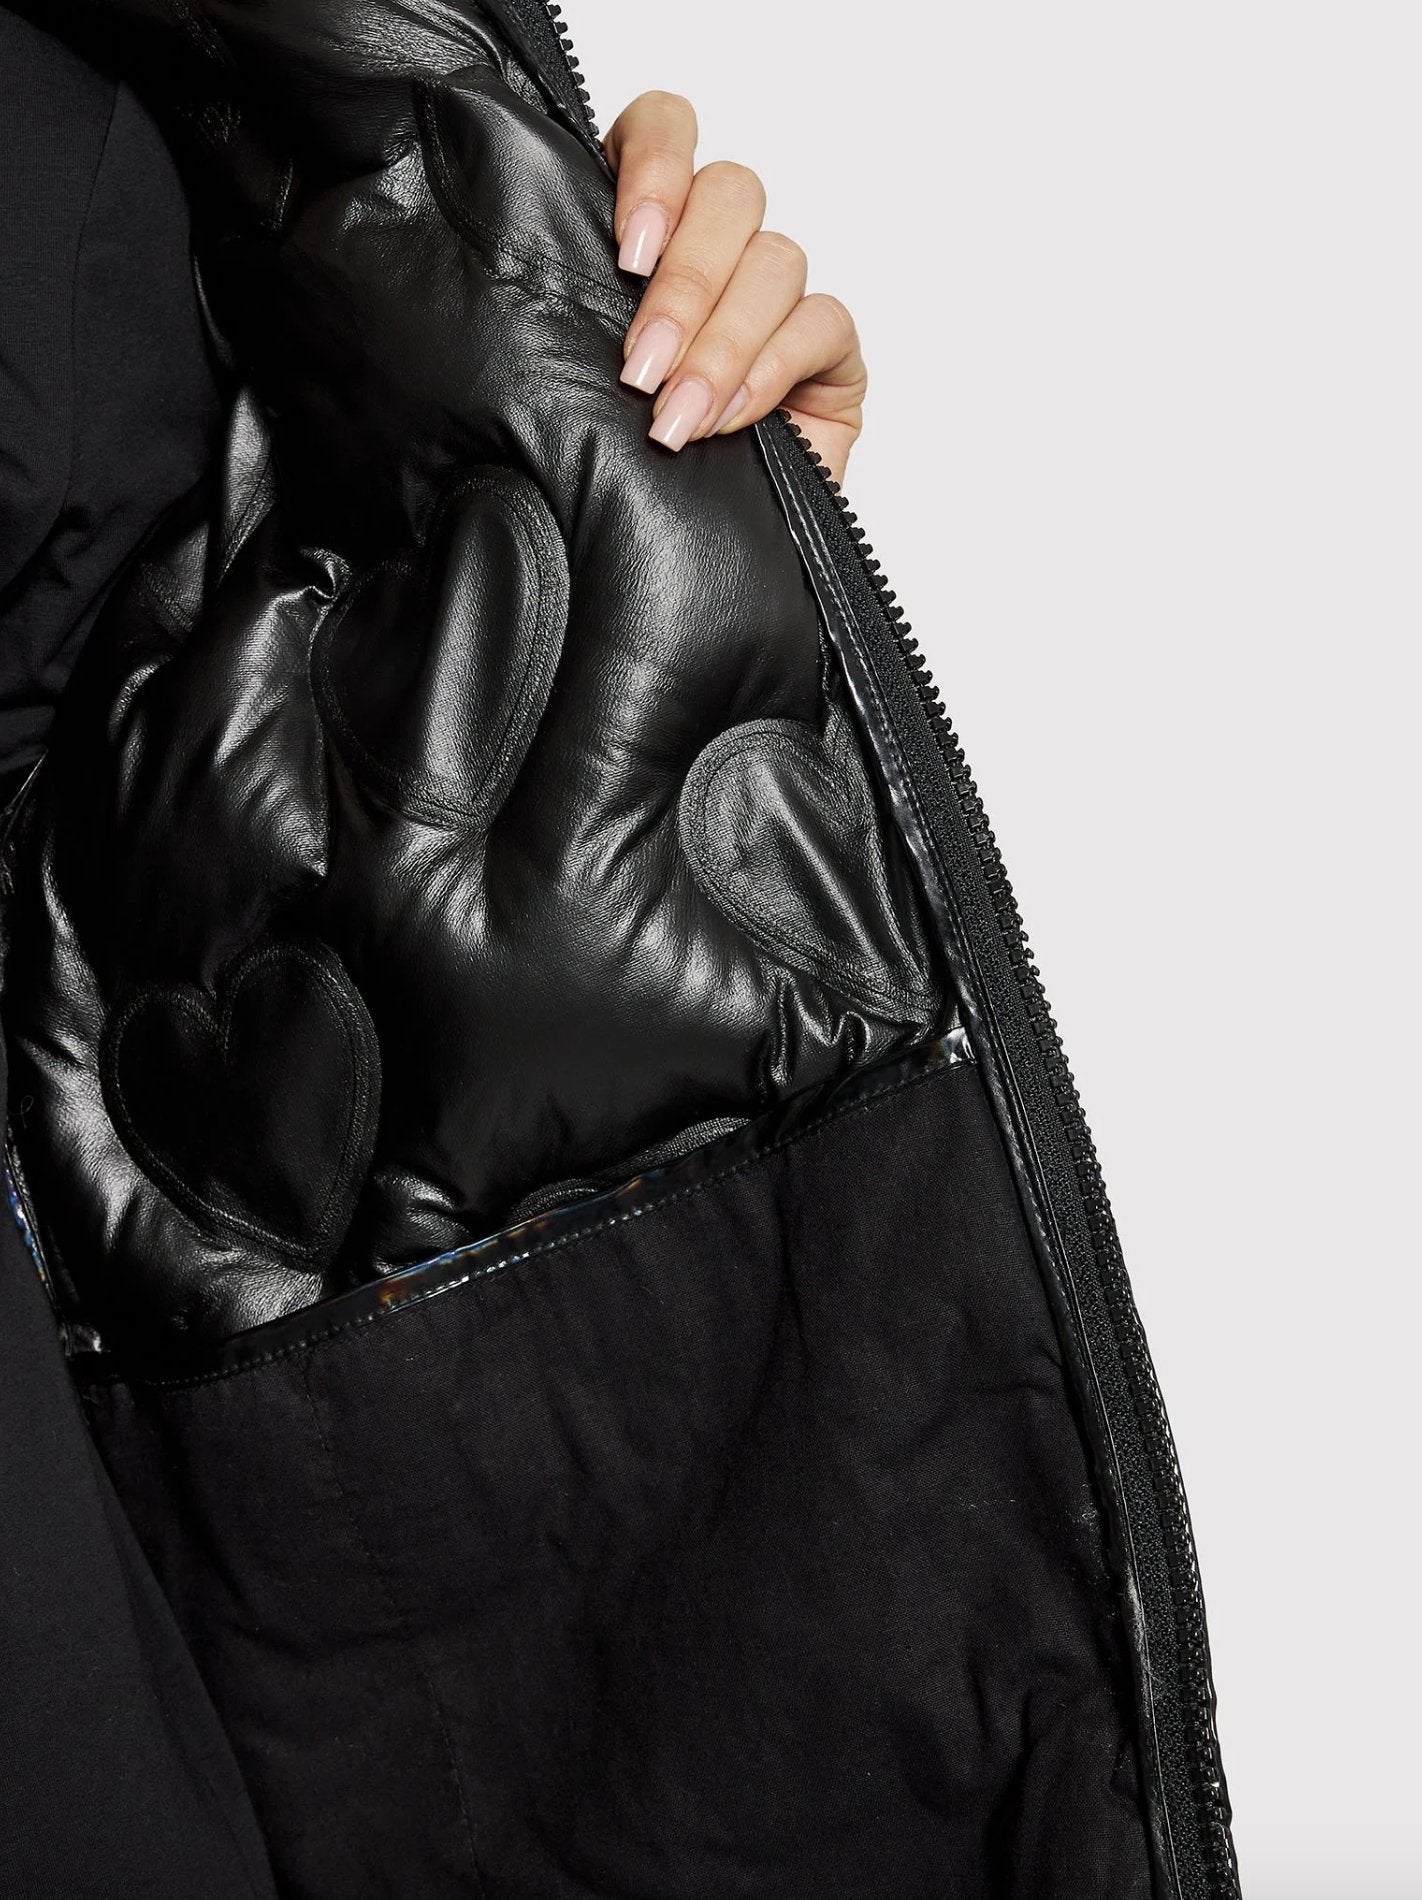 Love Moschino Black Polyester Jackets & Coat - Fizigo